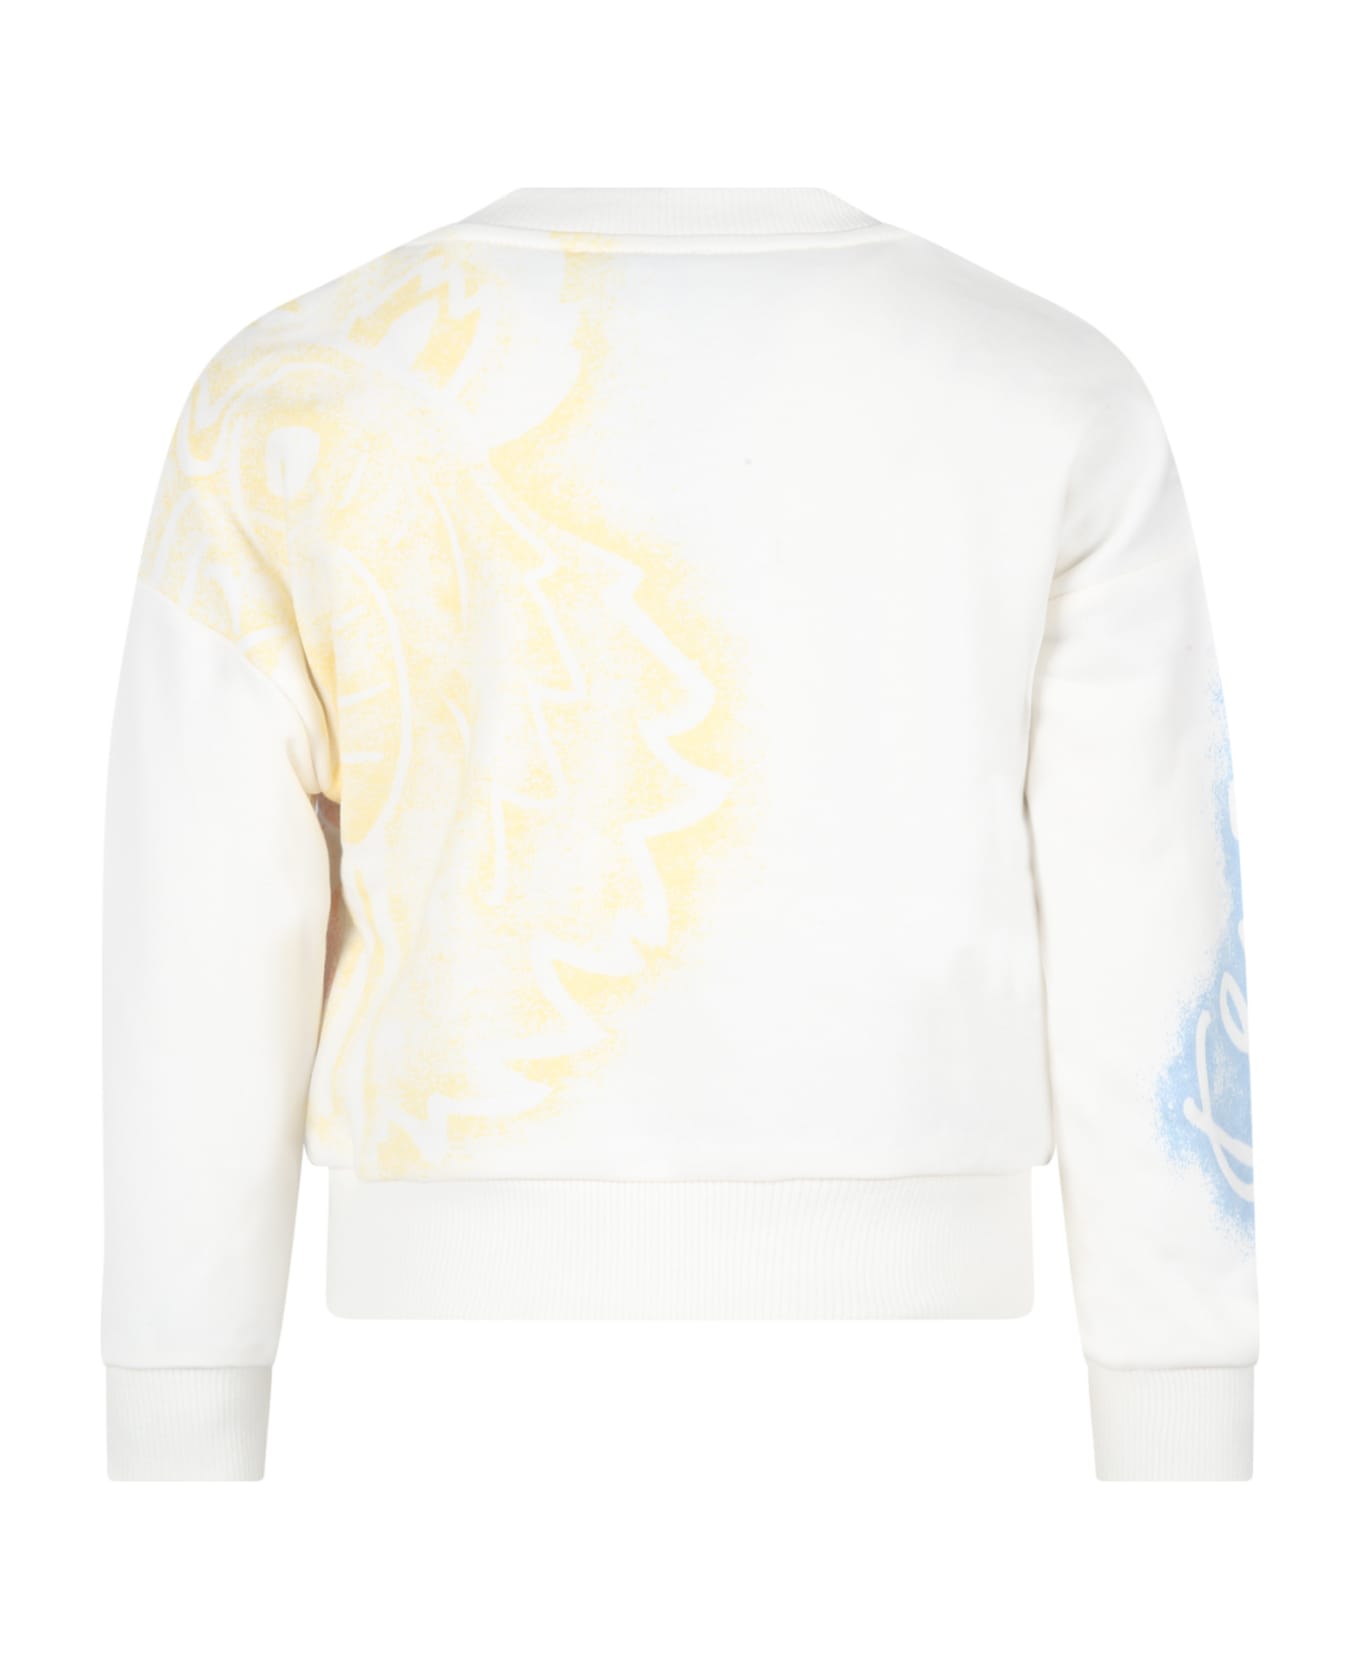 Kenzo Kids Ivory Sweatshirt For Girl With Iconic Tiger - Ivory